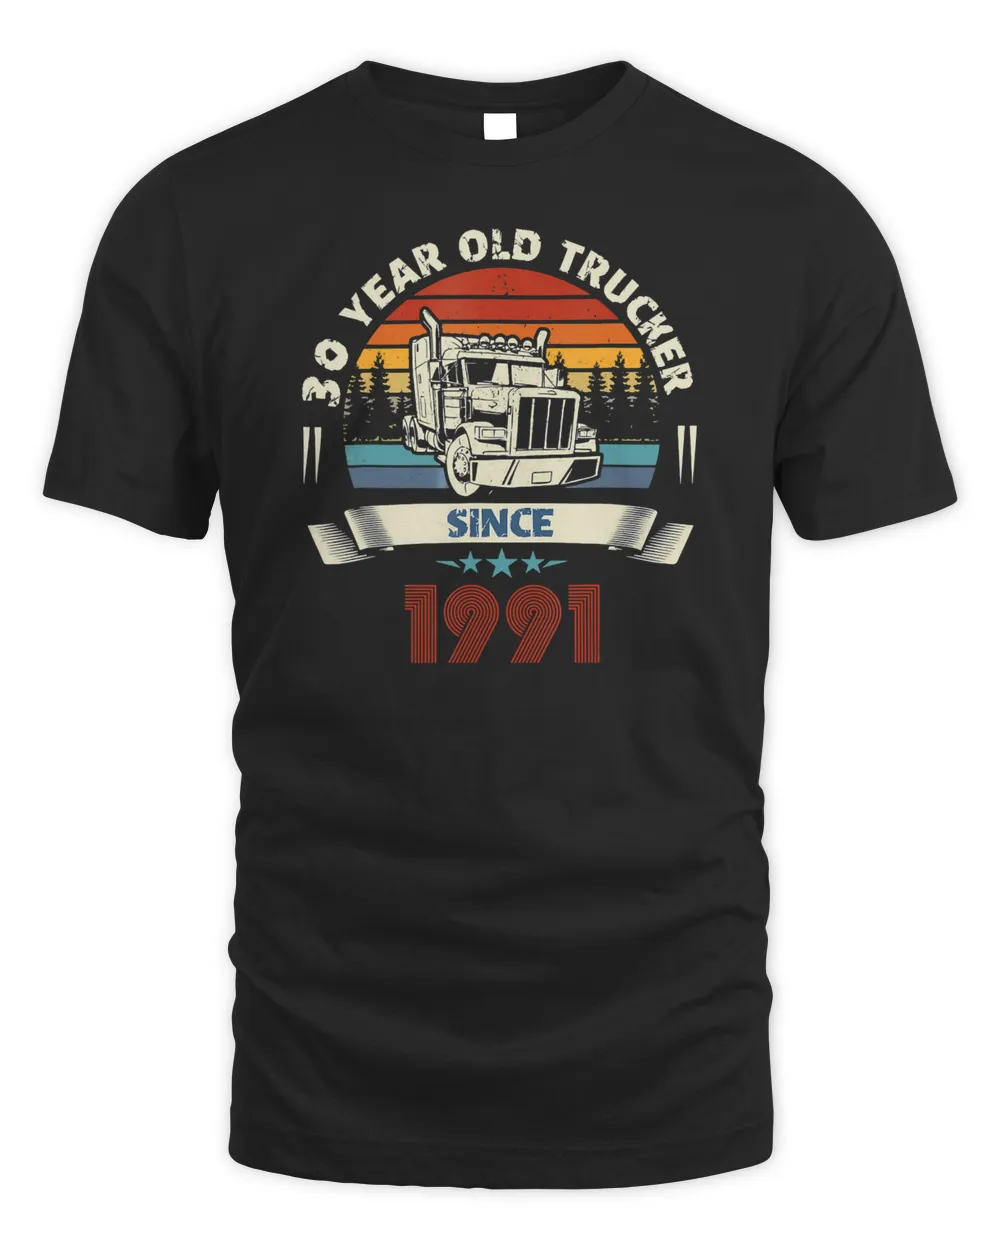 30 Year Old Trucker Since 1991 Birthday T-Shirt